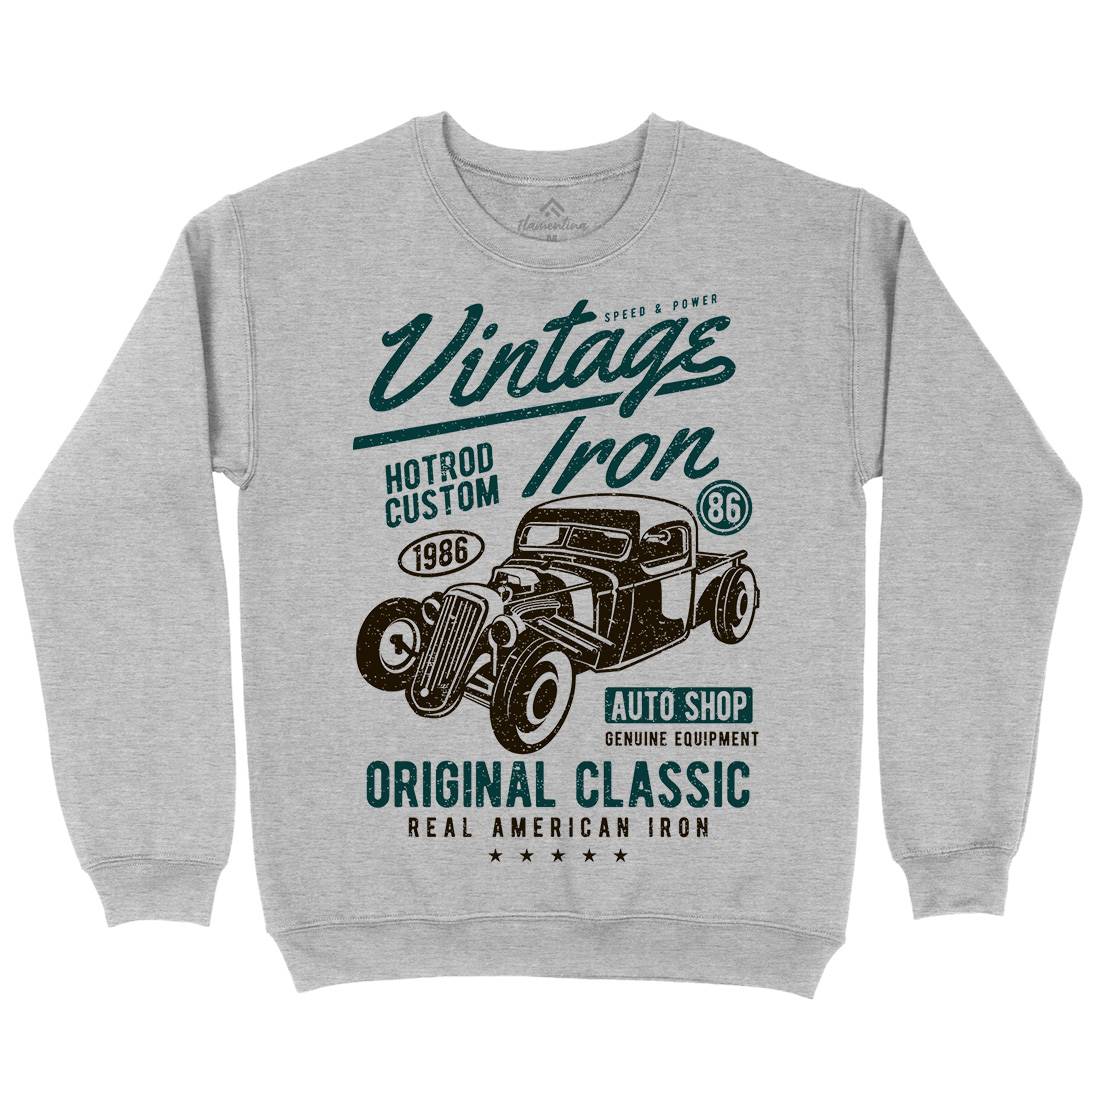 Vintage Iron Kids Crew Neck Sweatshirt Cars A192